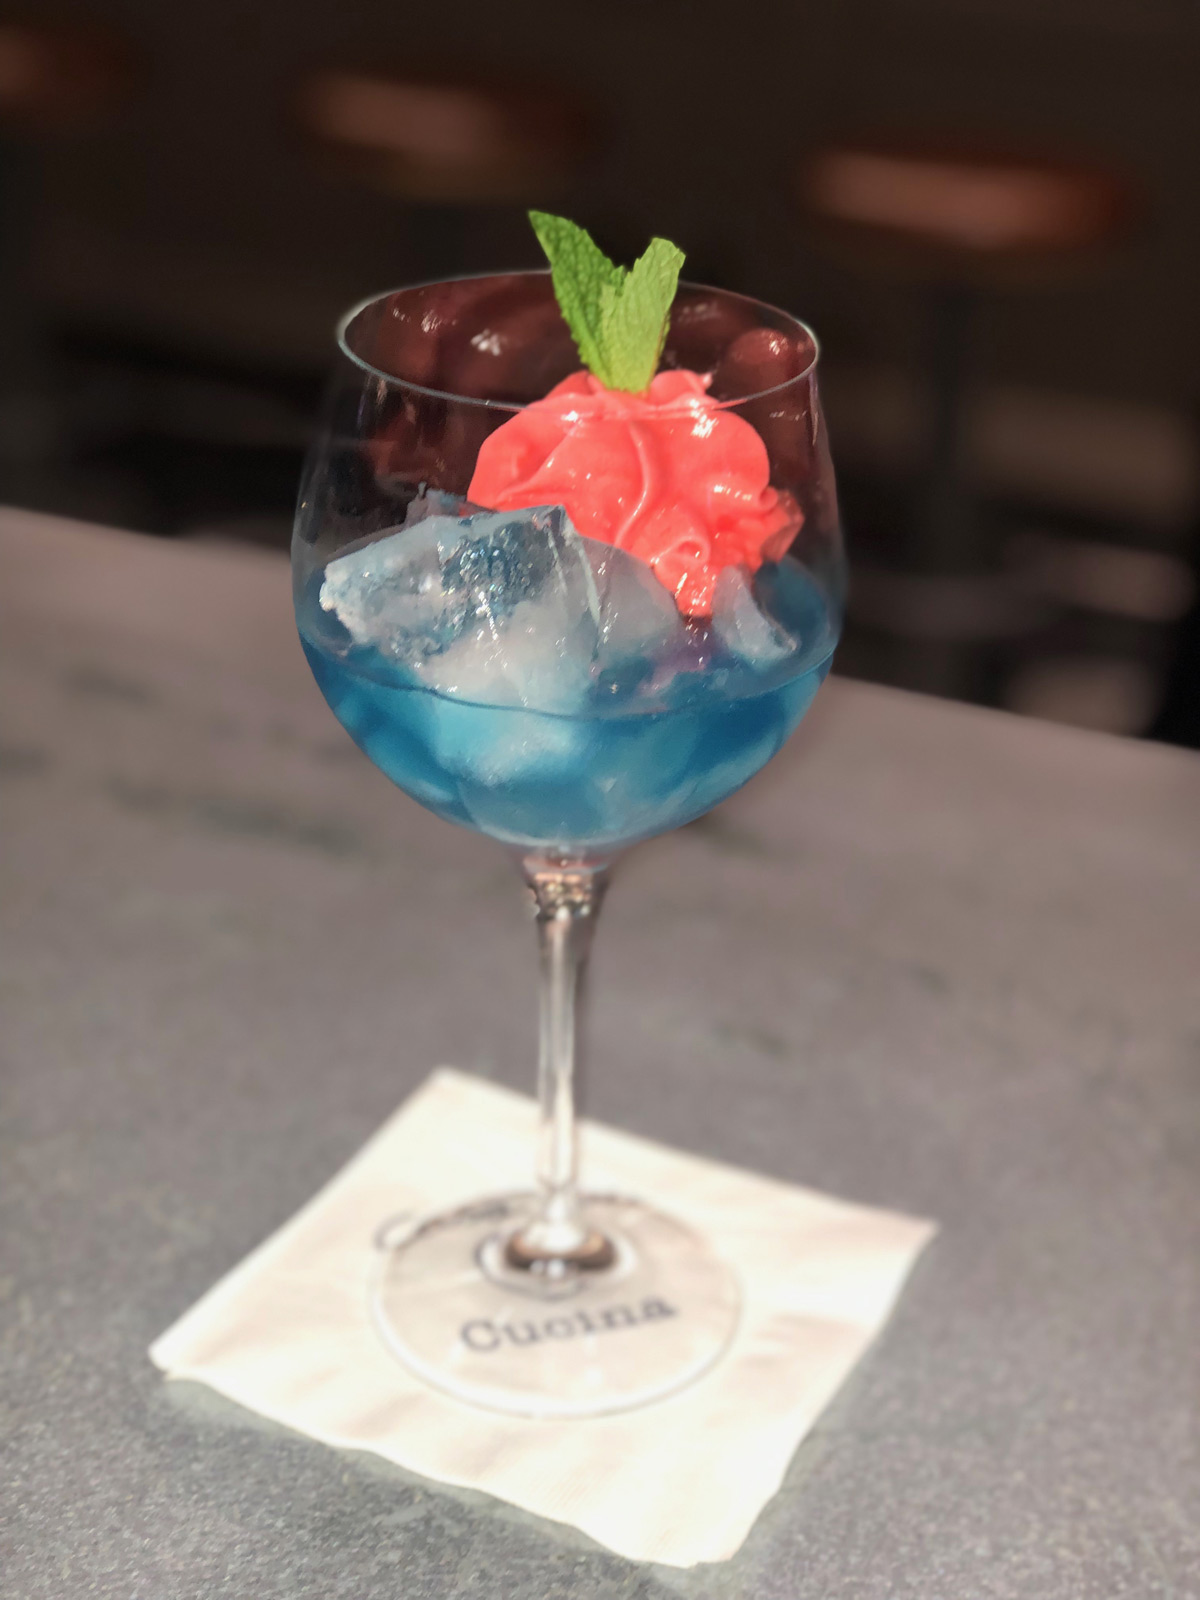 American Dream cocktail